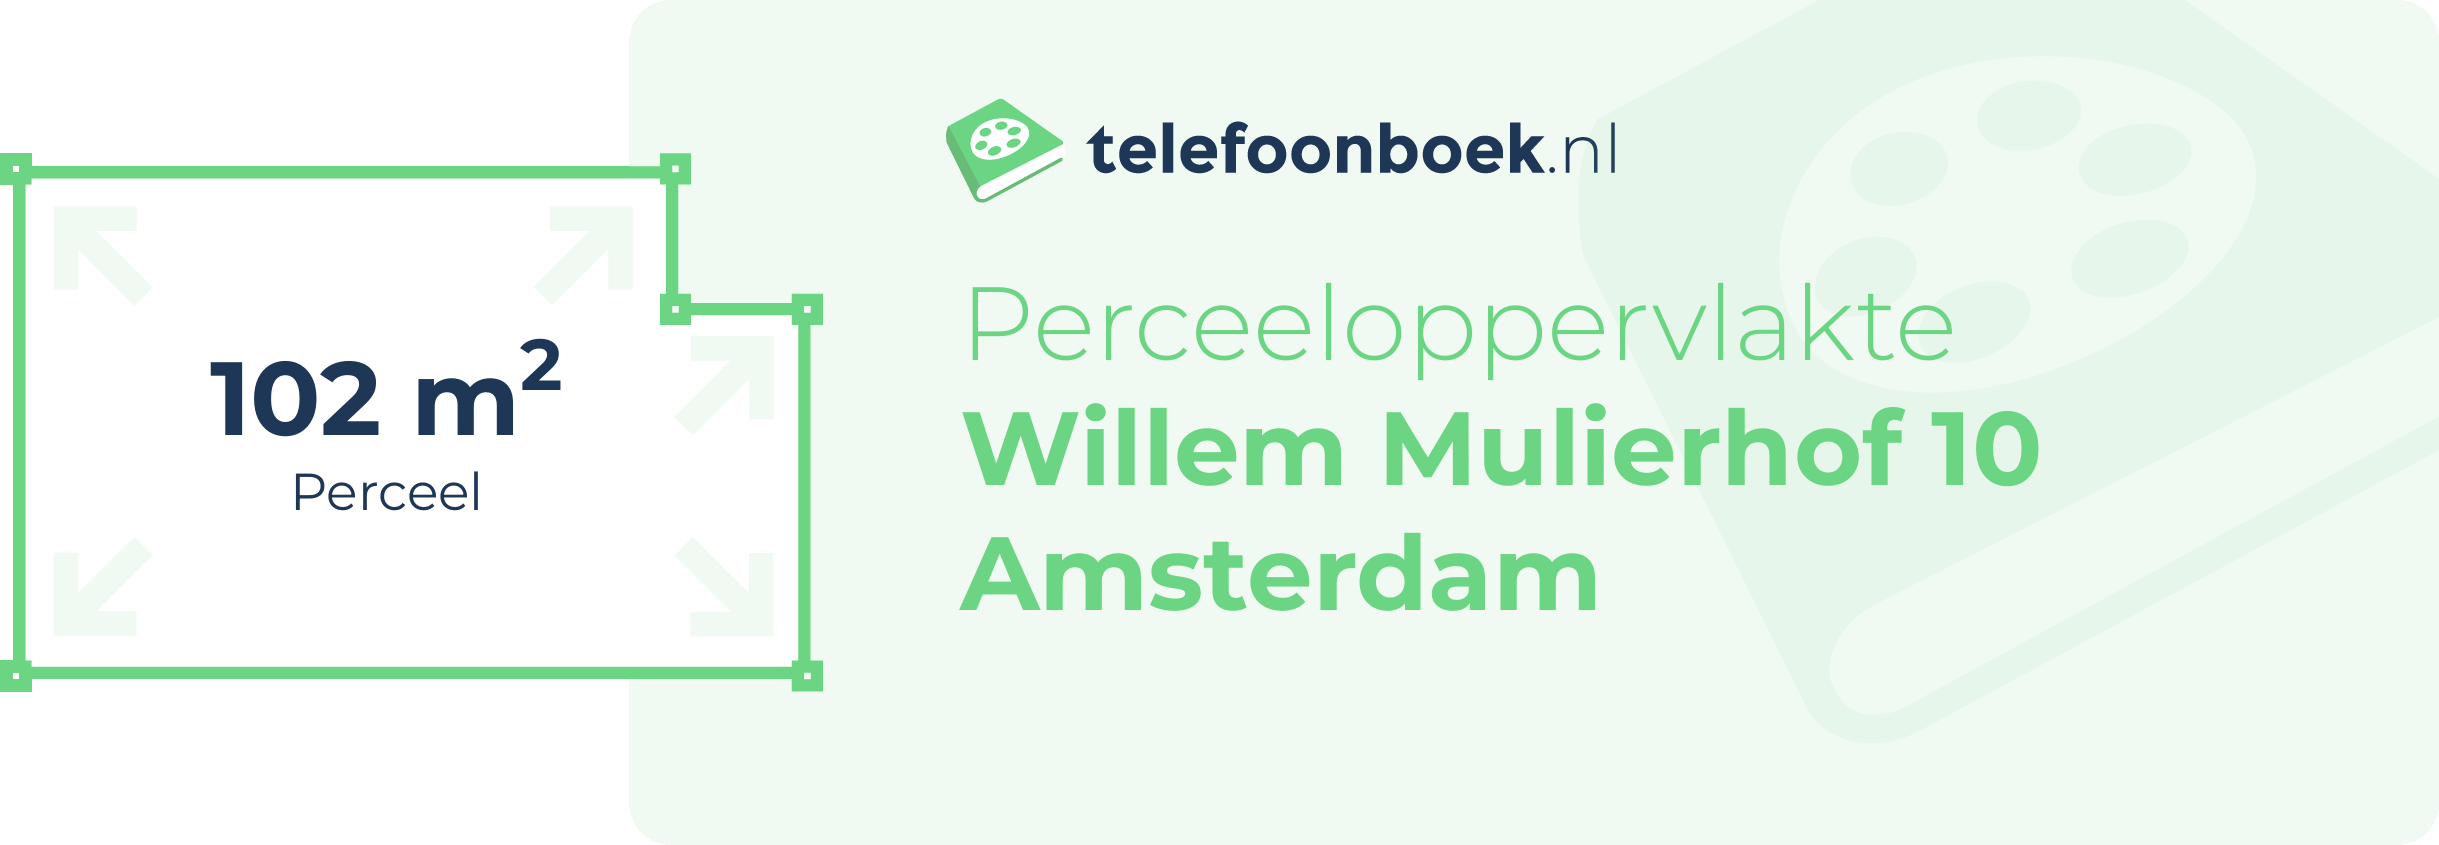 Perceeloppervlakte Willem Mulierhof 10 Amsterdam